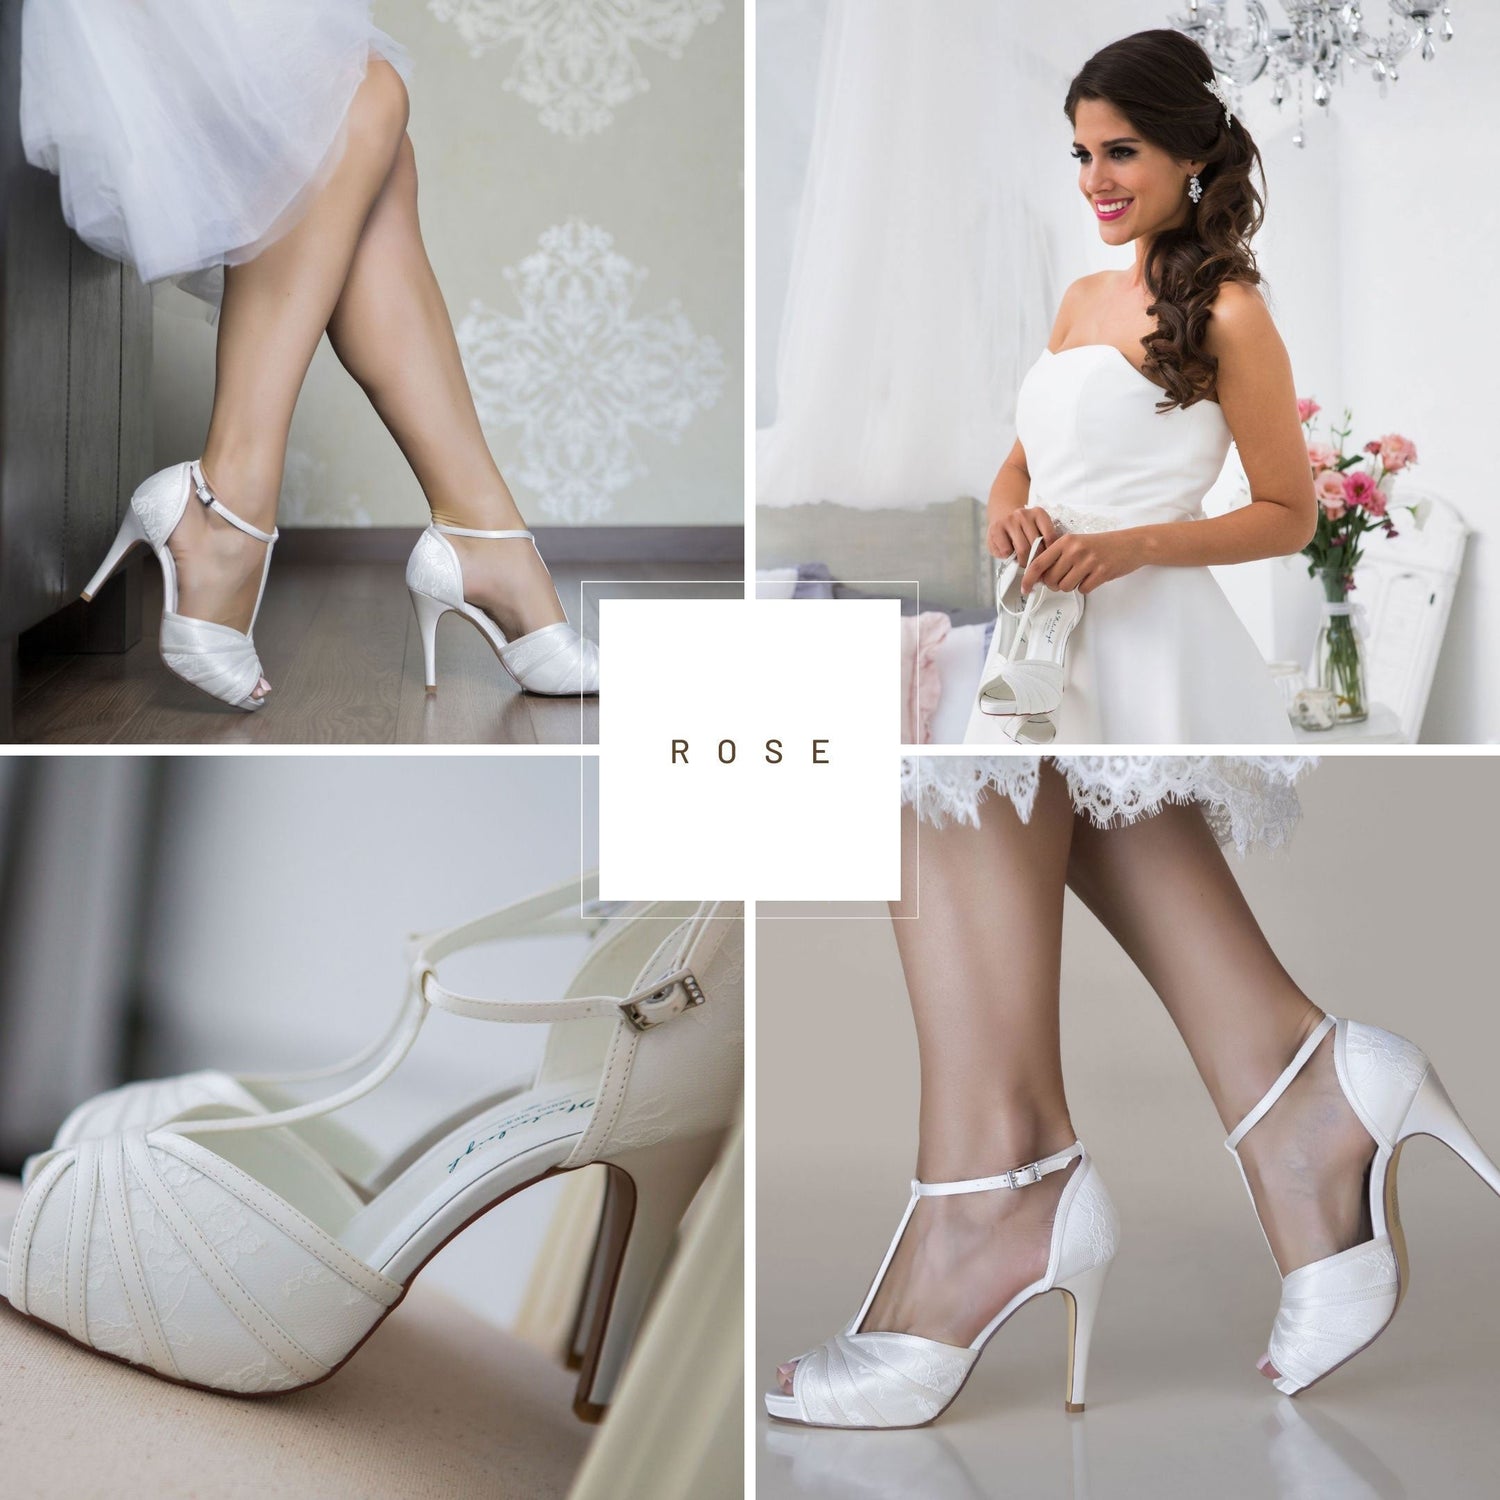 New Dune wedding / pageant shoes size 41 code 271 platform heel ivory  diamante | eBay